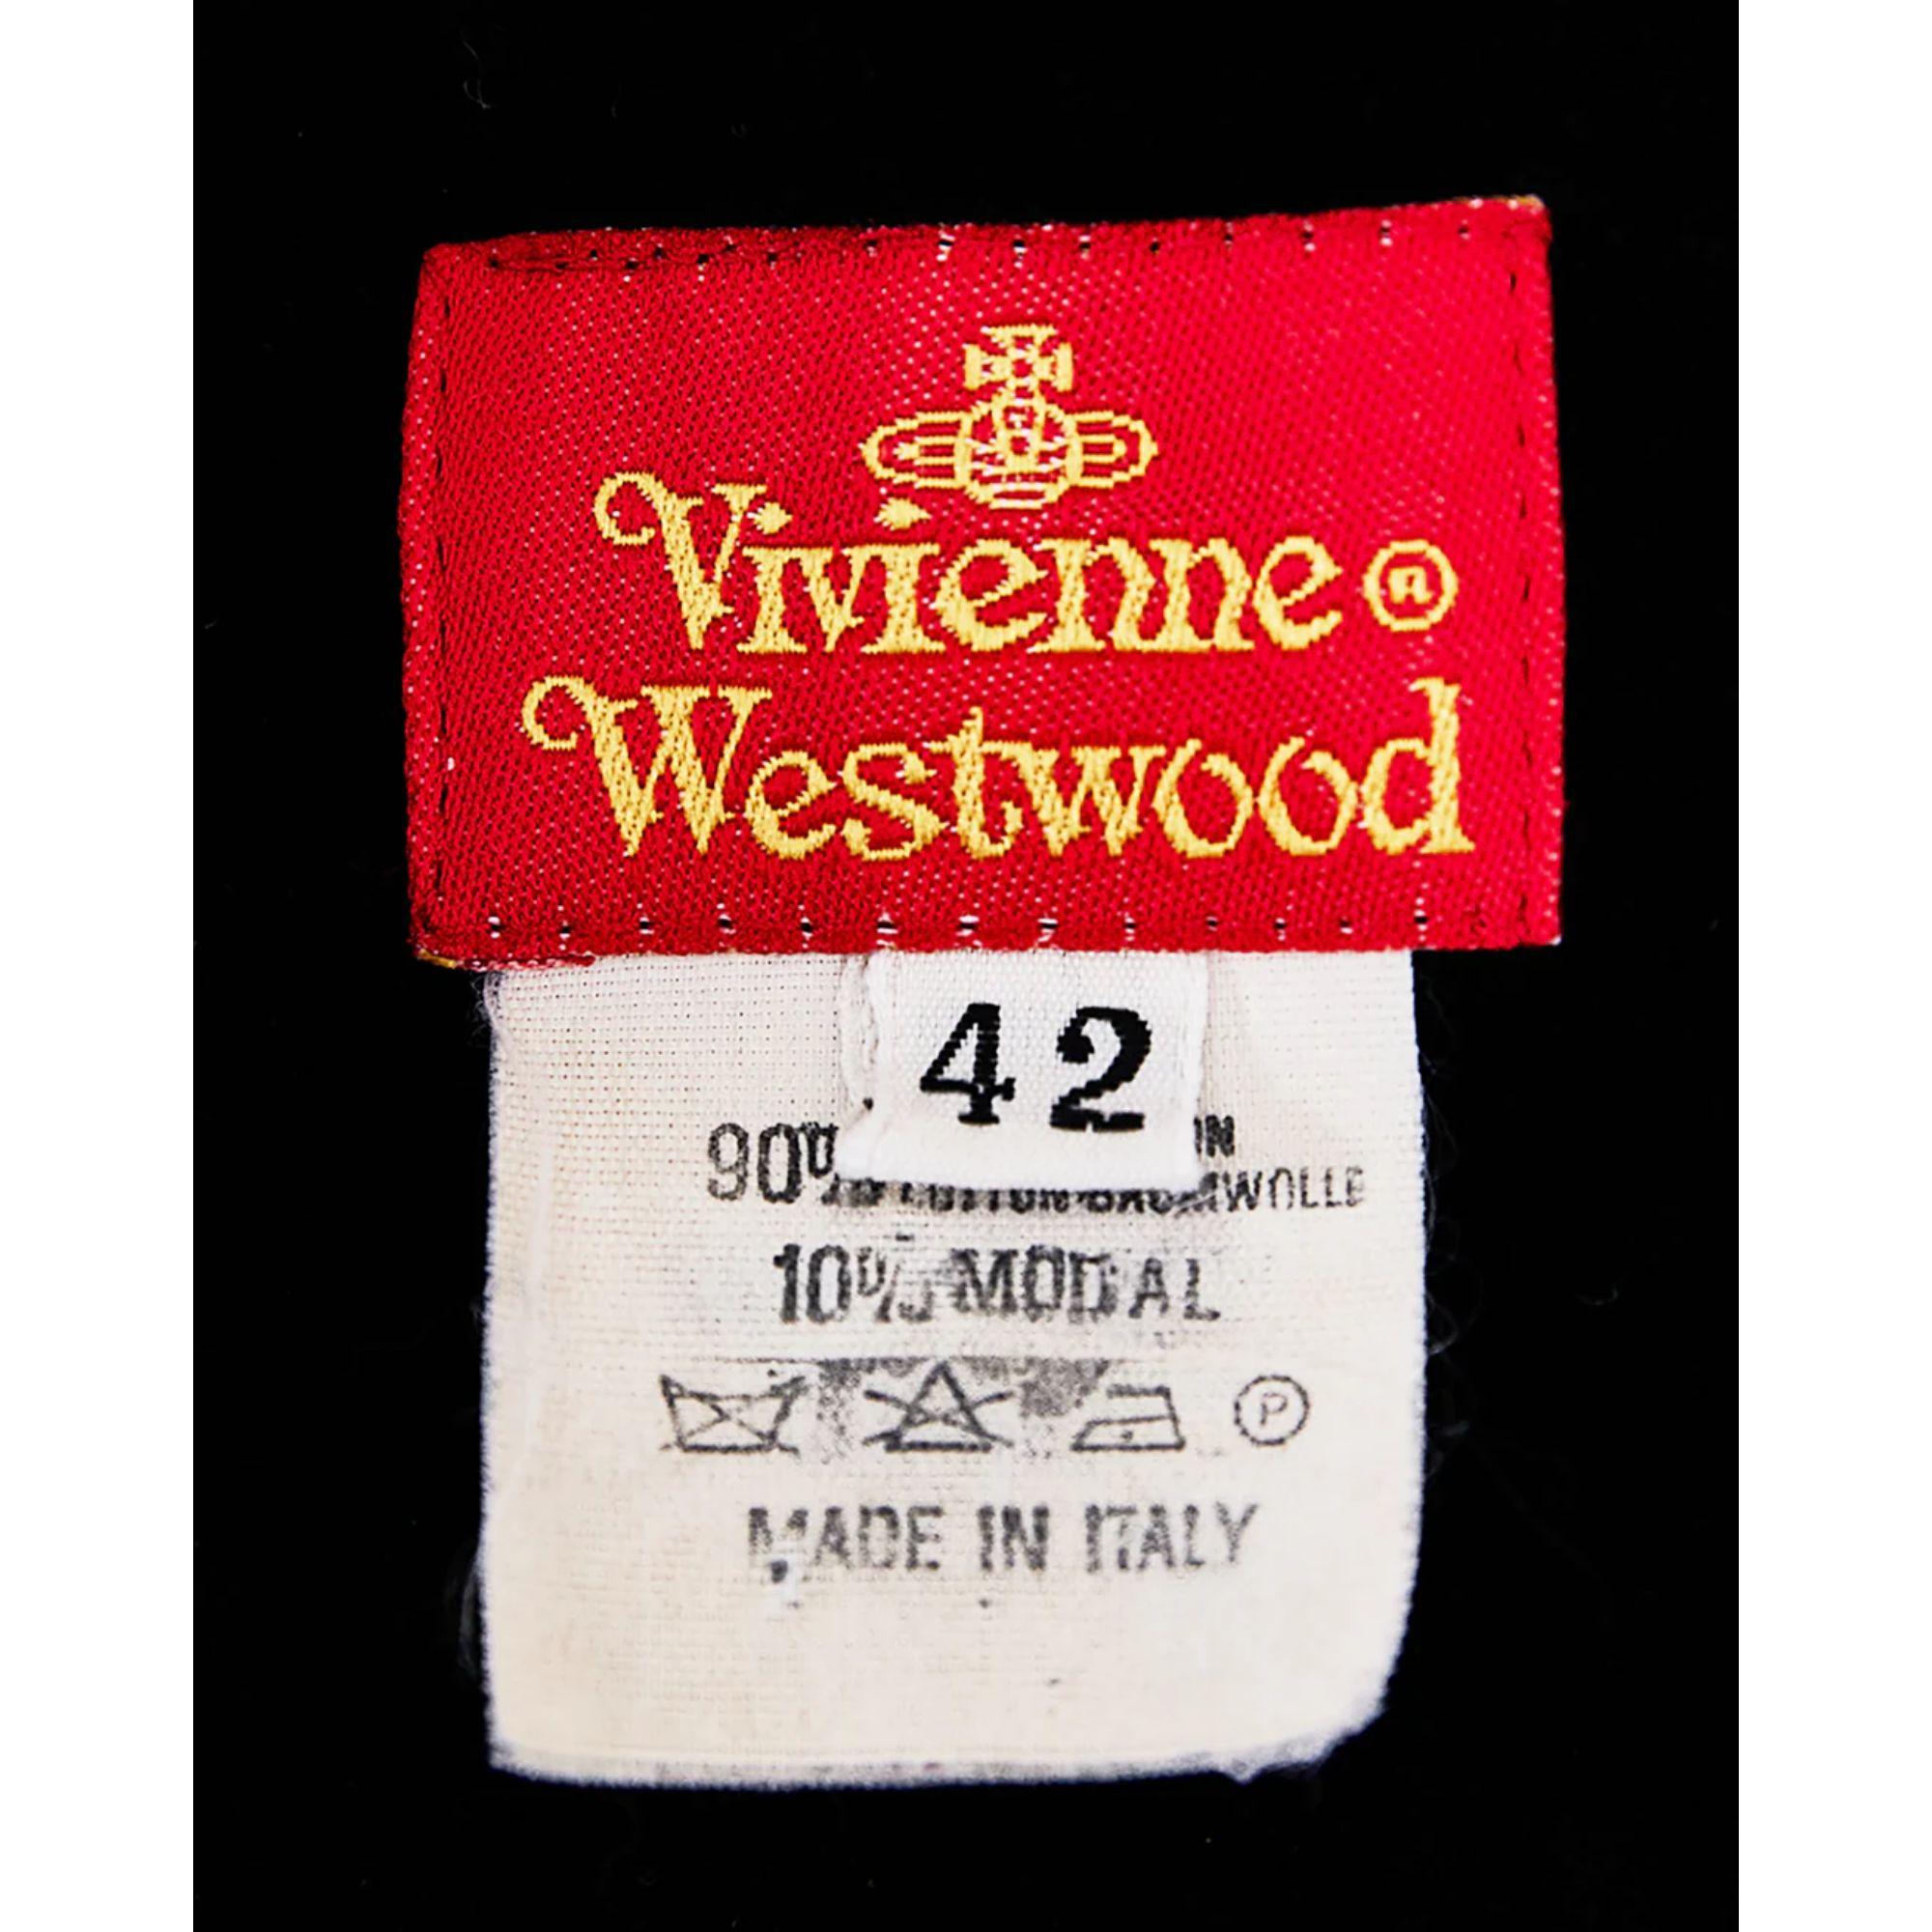 S/S 1995 Vivienne Westwood 'Erotic Zones' Collection Velvet Skirt 10